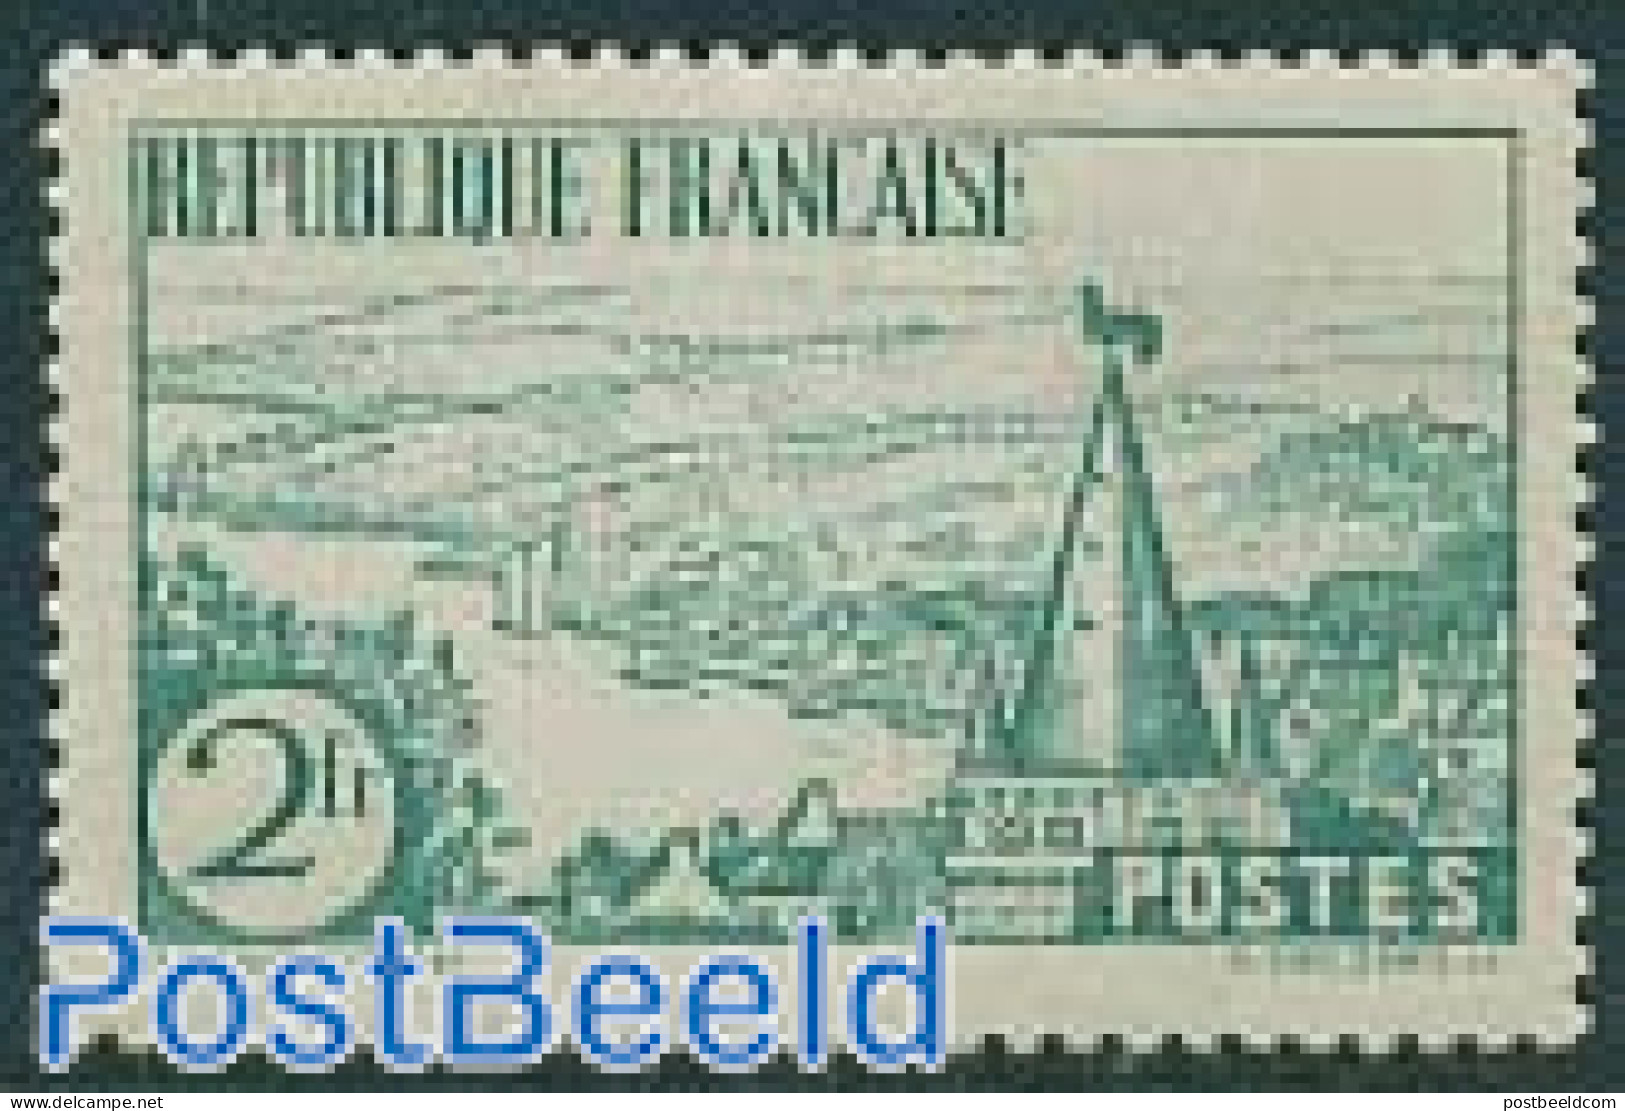 France 1935 Breton 1v, Mint NH, Art - Castles & Fortifications - Ungebraucht